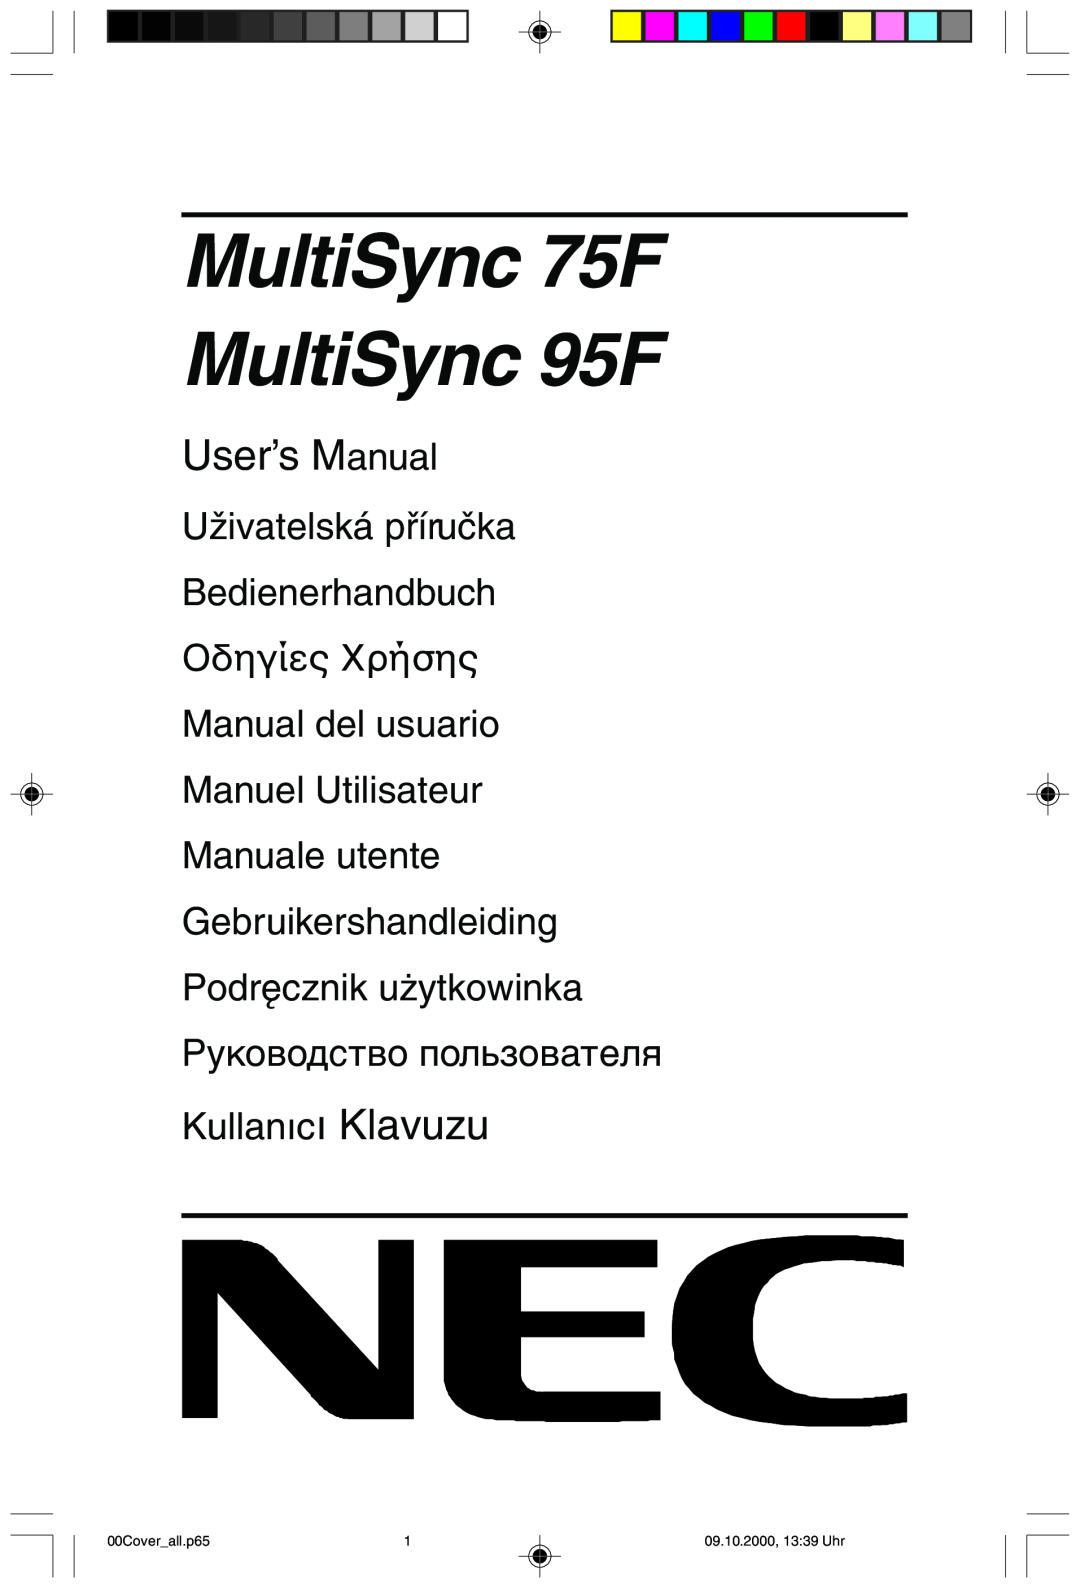 NEC user manual MultiSync 75F MultiSync 95F, User’s Manual, Kullan∂c∂ Klavuzu, UÏivatelská pﬁíruãka, Bedienerhandbuch 